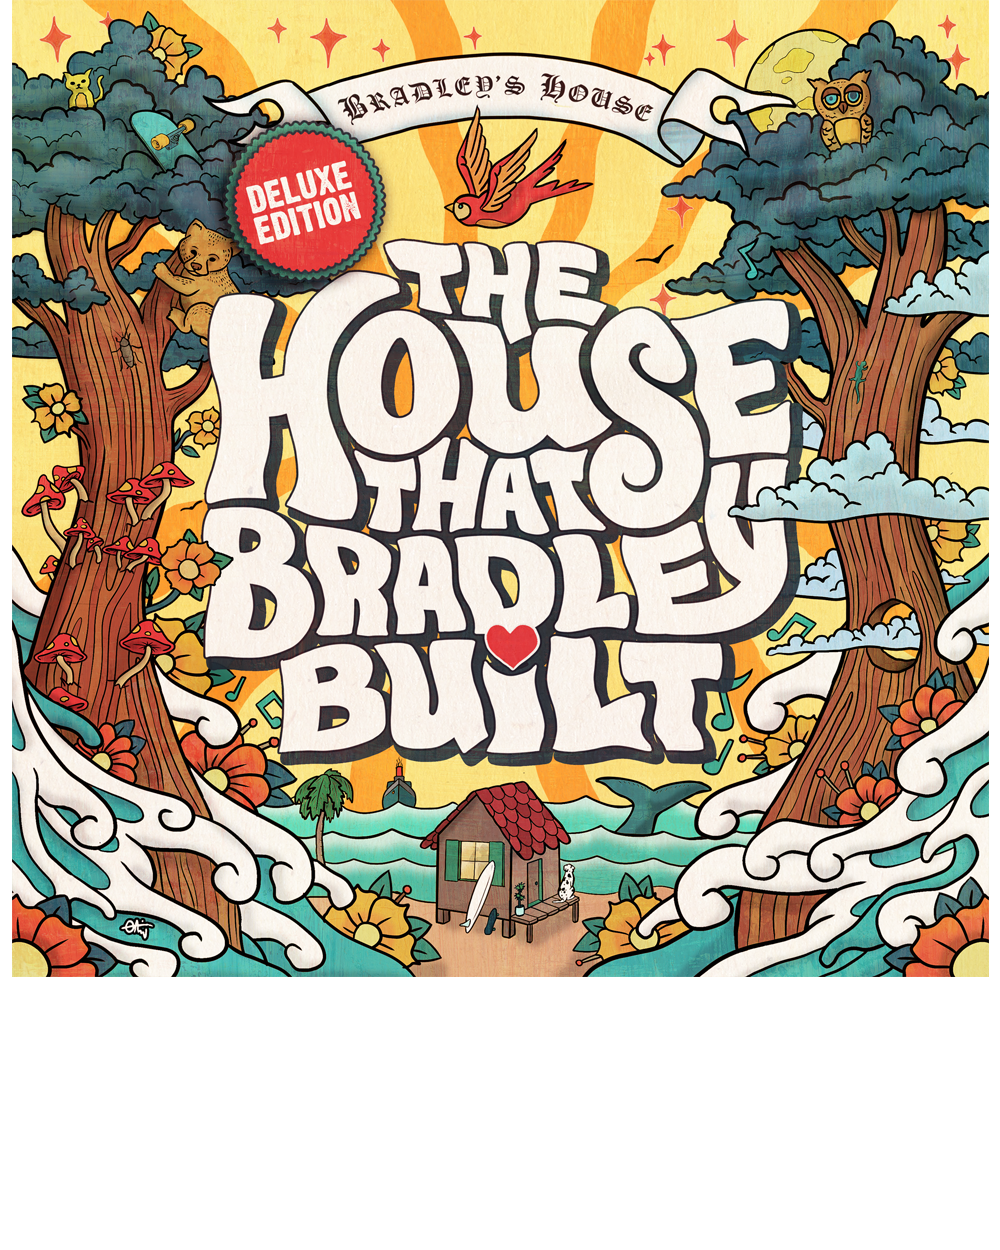 The House That Bradley Built